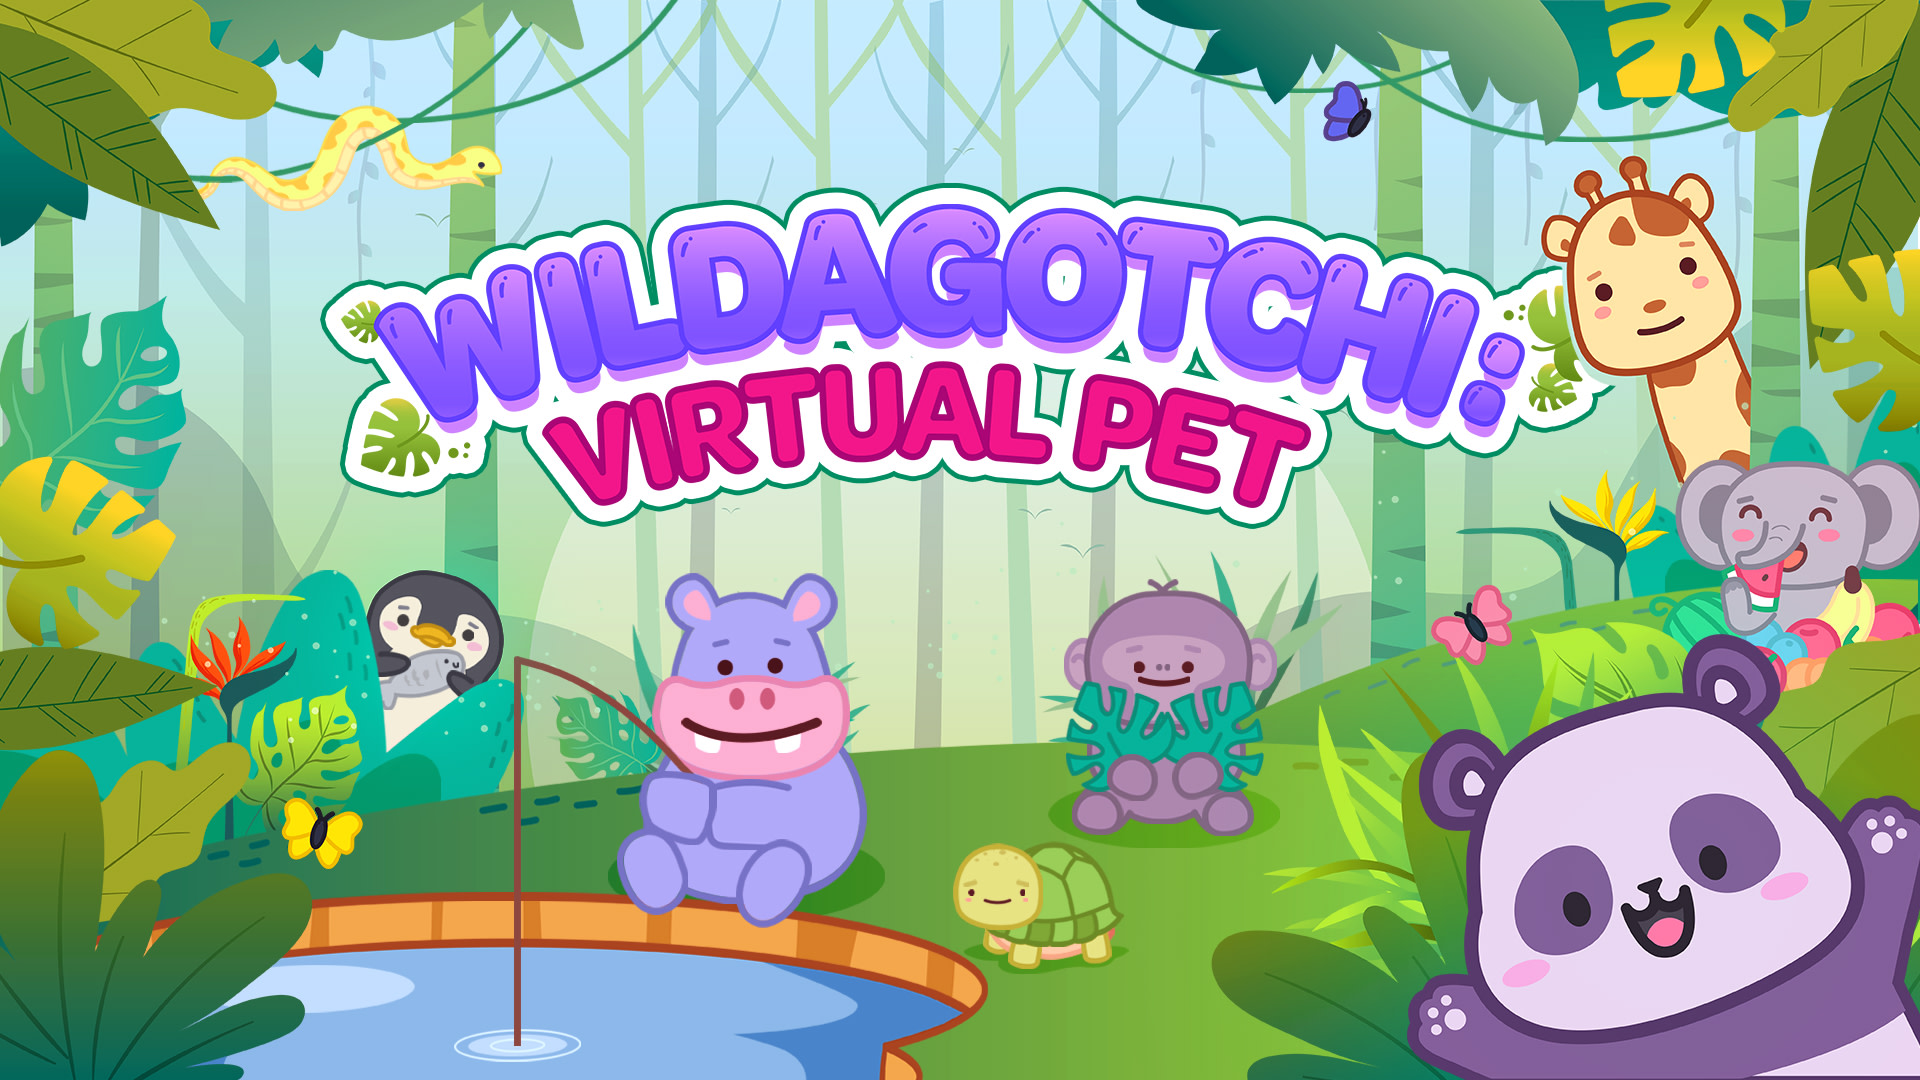 Wildagotchi: Virtual Pet 1